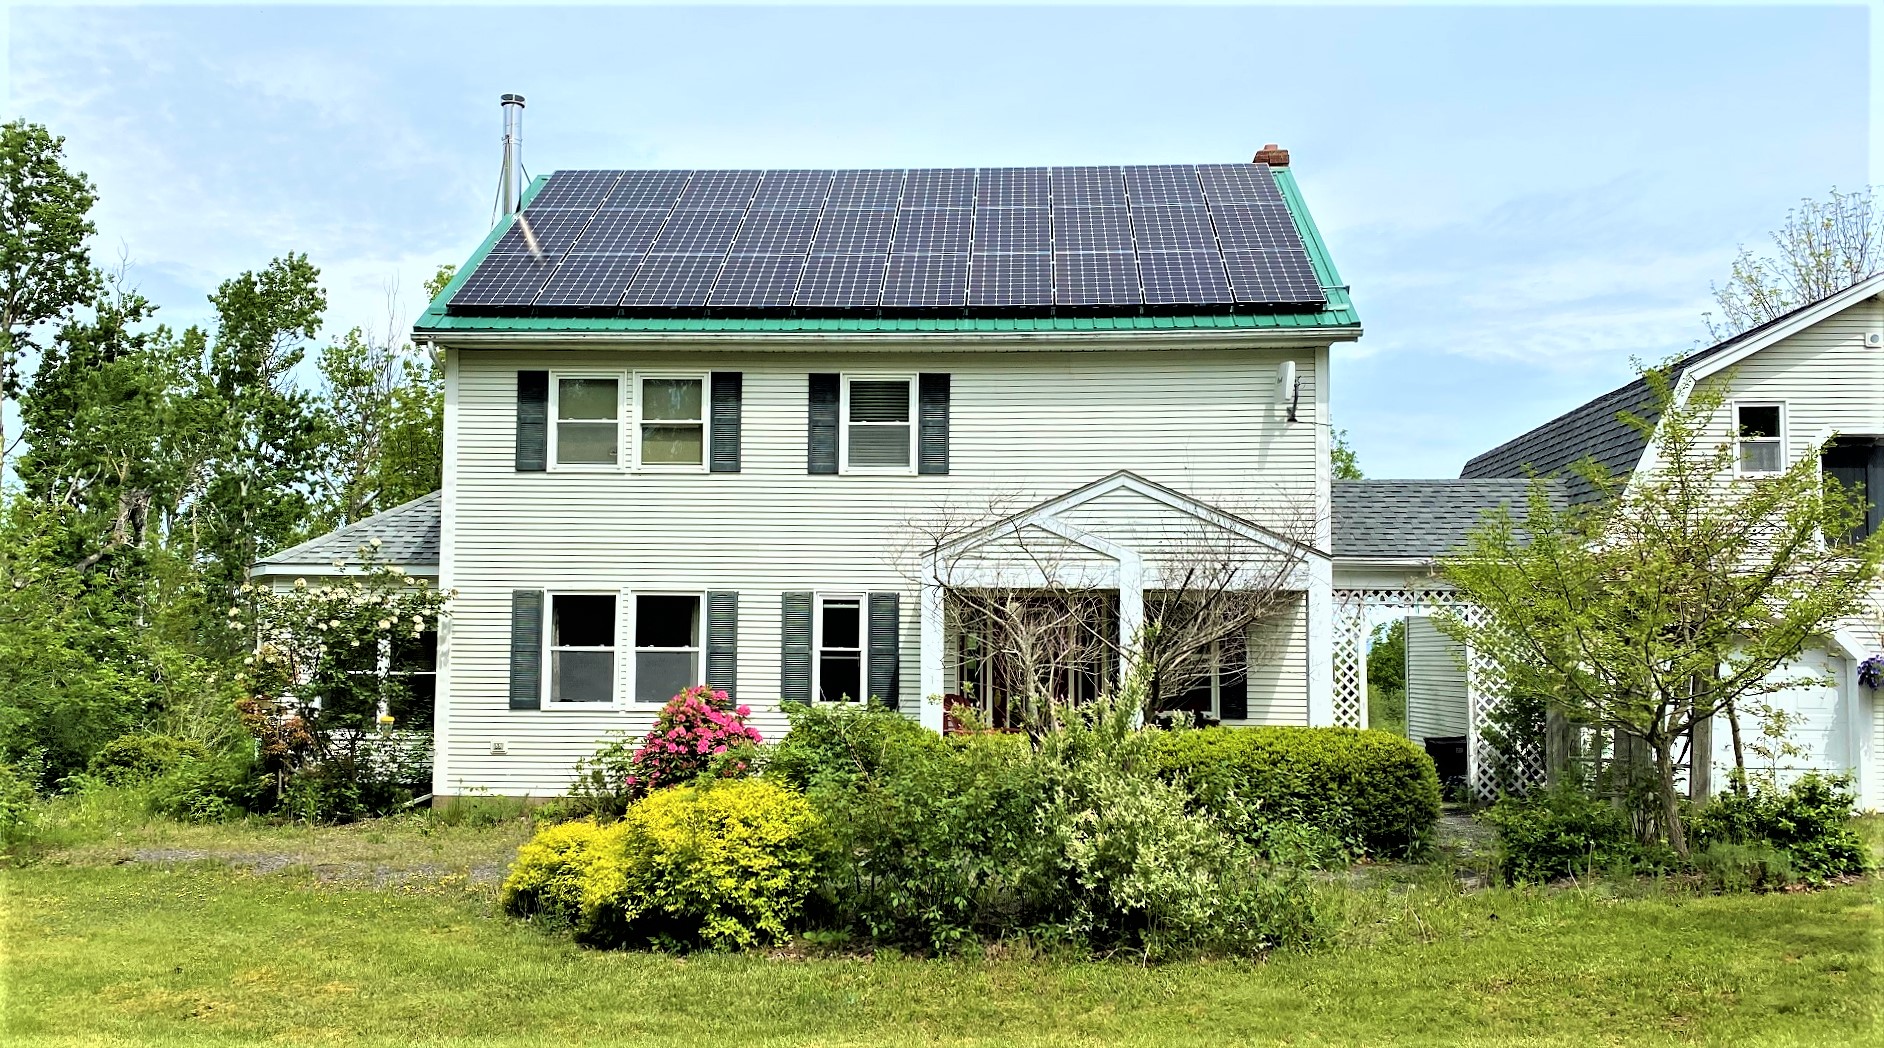 federal-rebates-greener-homes-energuide-home-energy-assessments